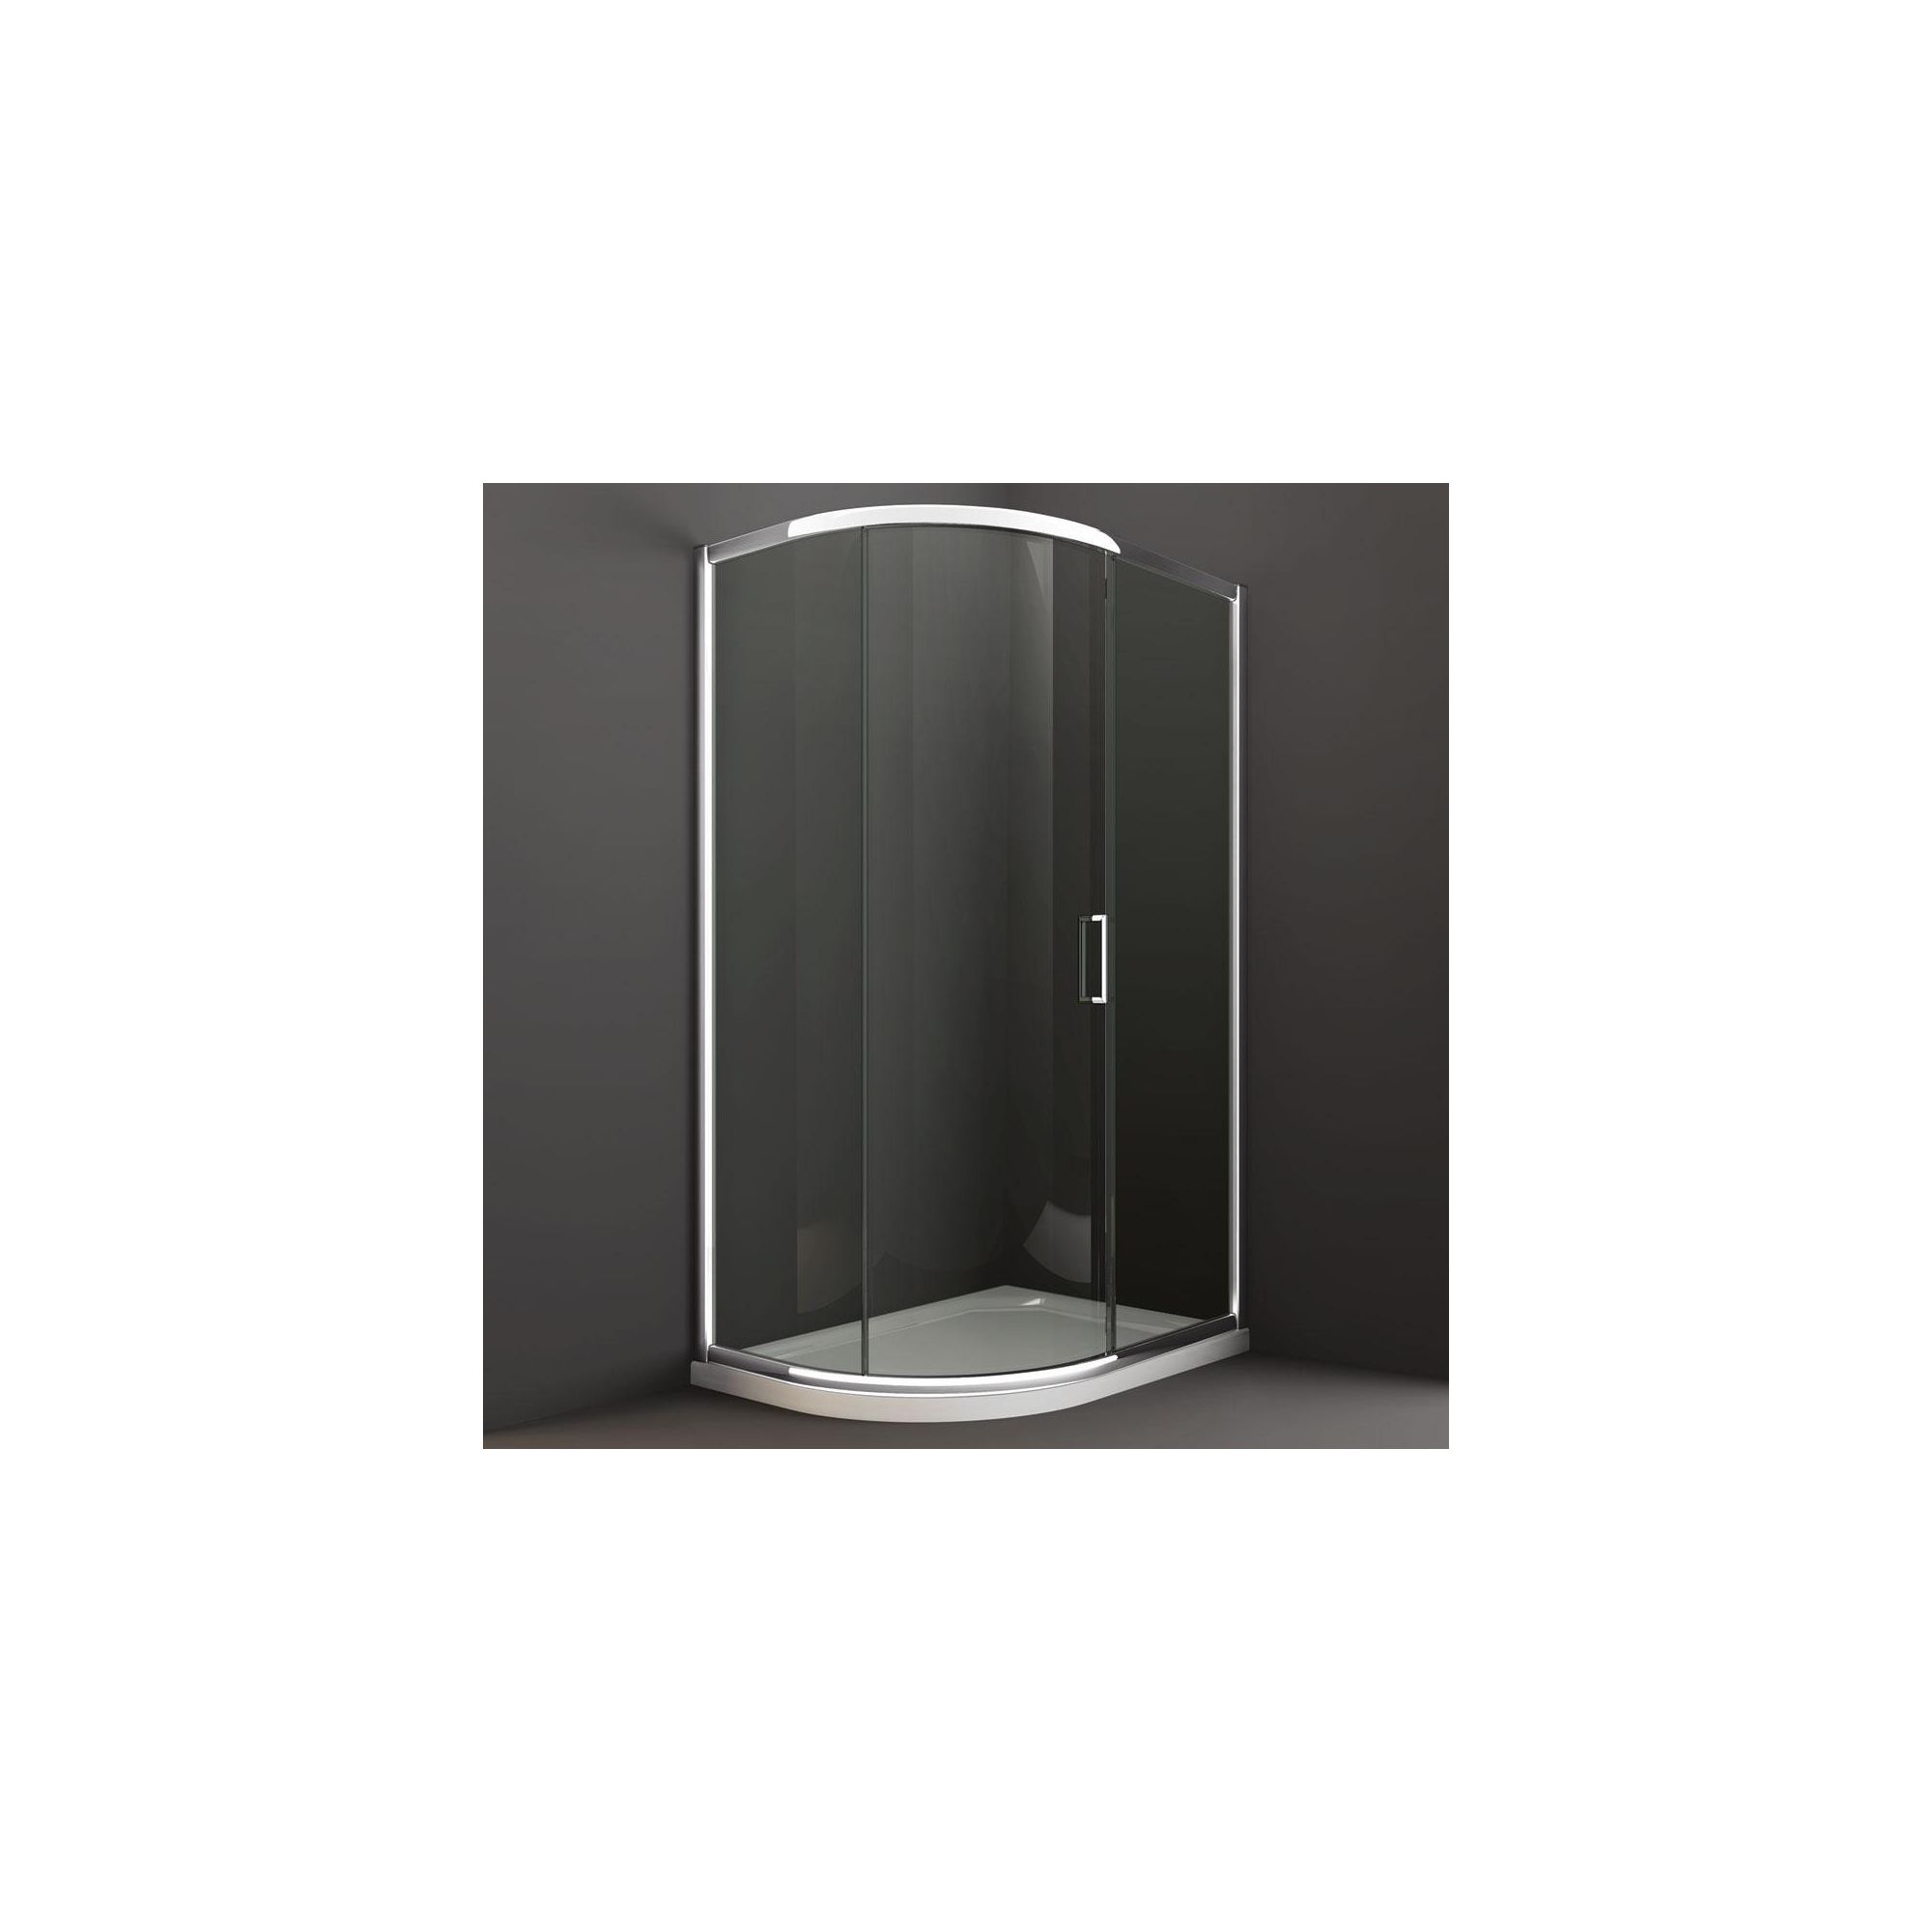 Merlyn Series 8 Offset Quadrant Shower Door, 1200mm x 800mm, Chrome Frame, 8mm Glass at Tescos Direct